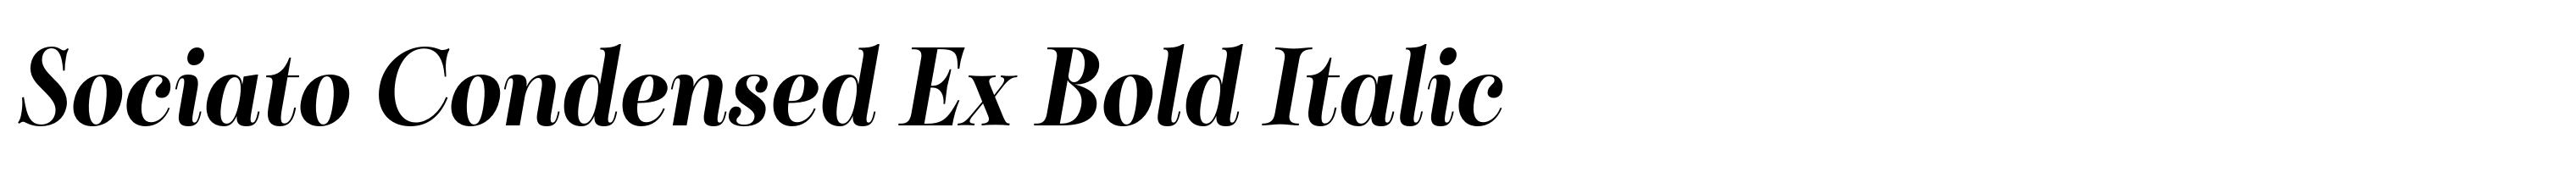 Sociato Condensed Ex Bold Italic